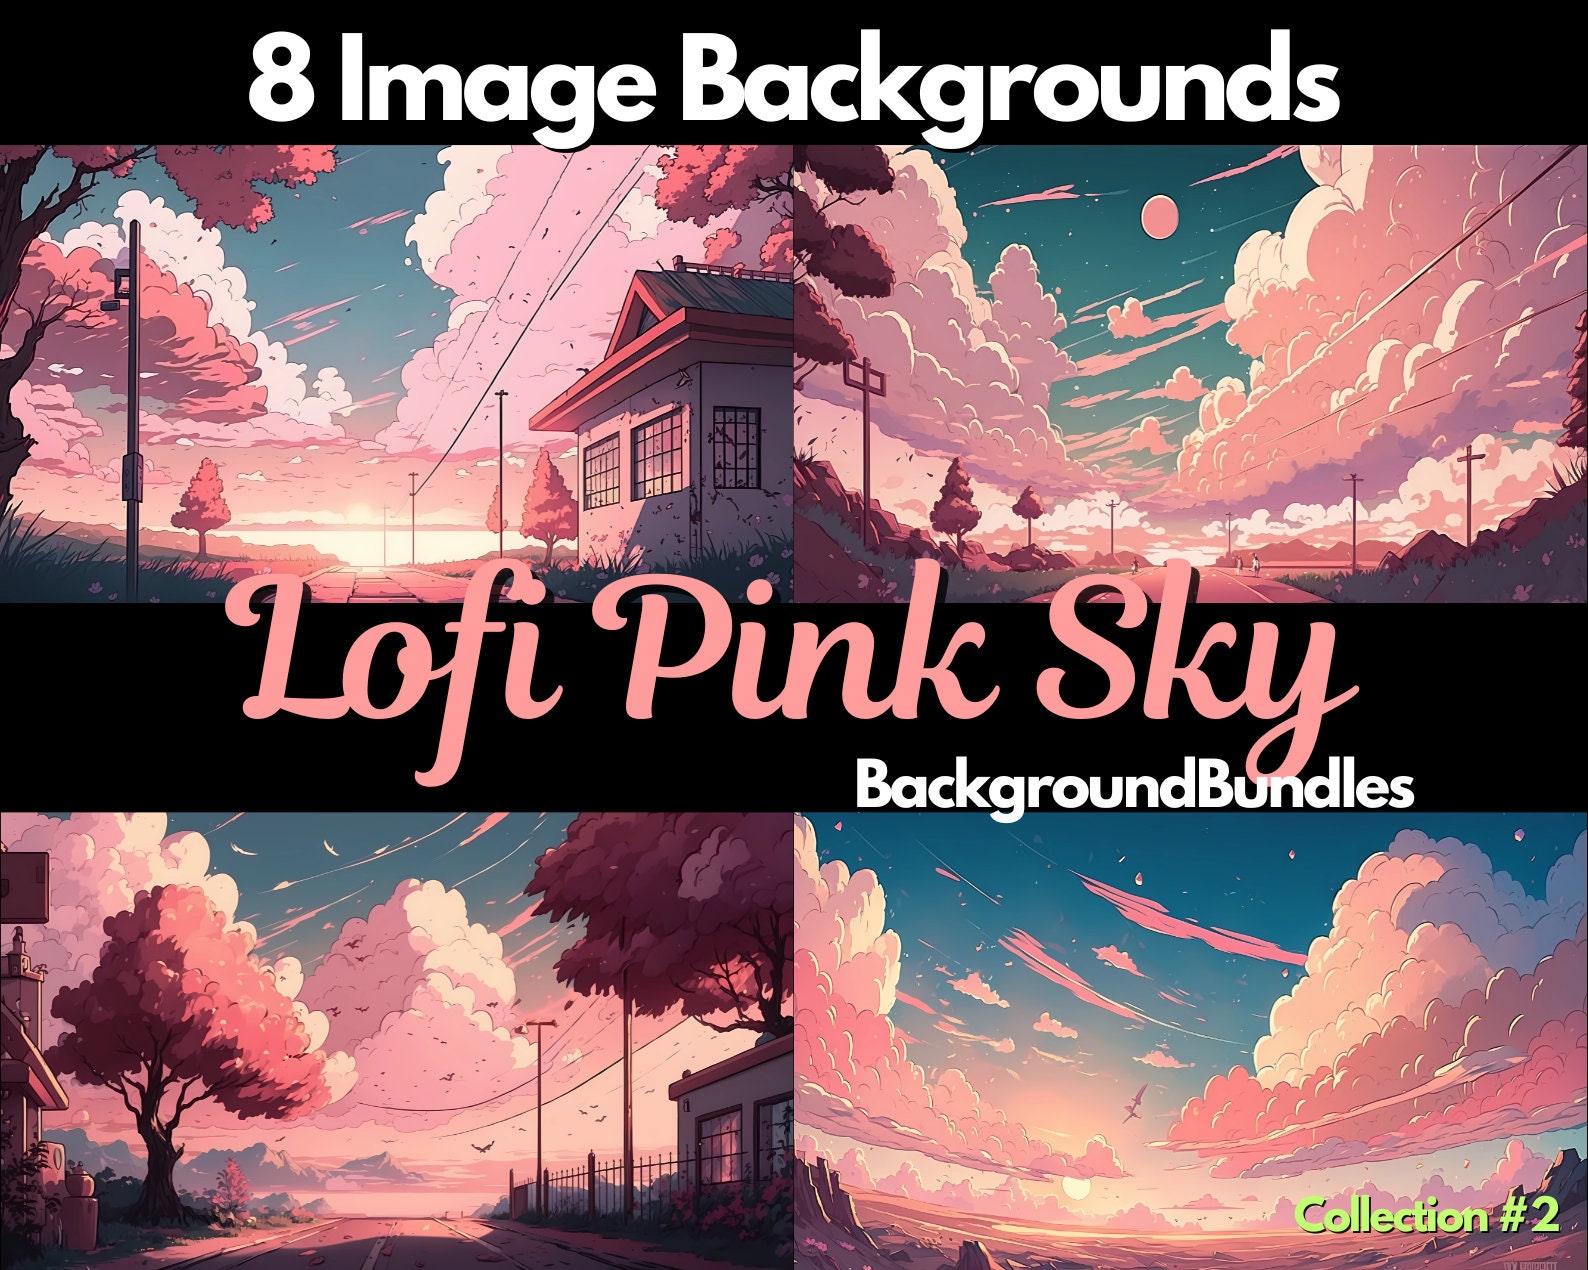 Dark Pink Clouds Wallpaper Kawaii Wallpaper Lofi (Download Now) 